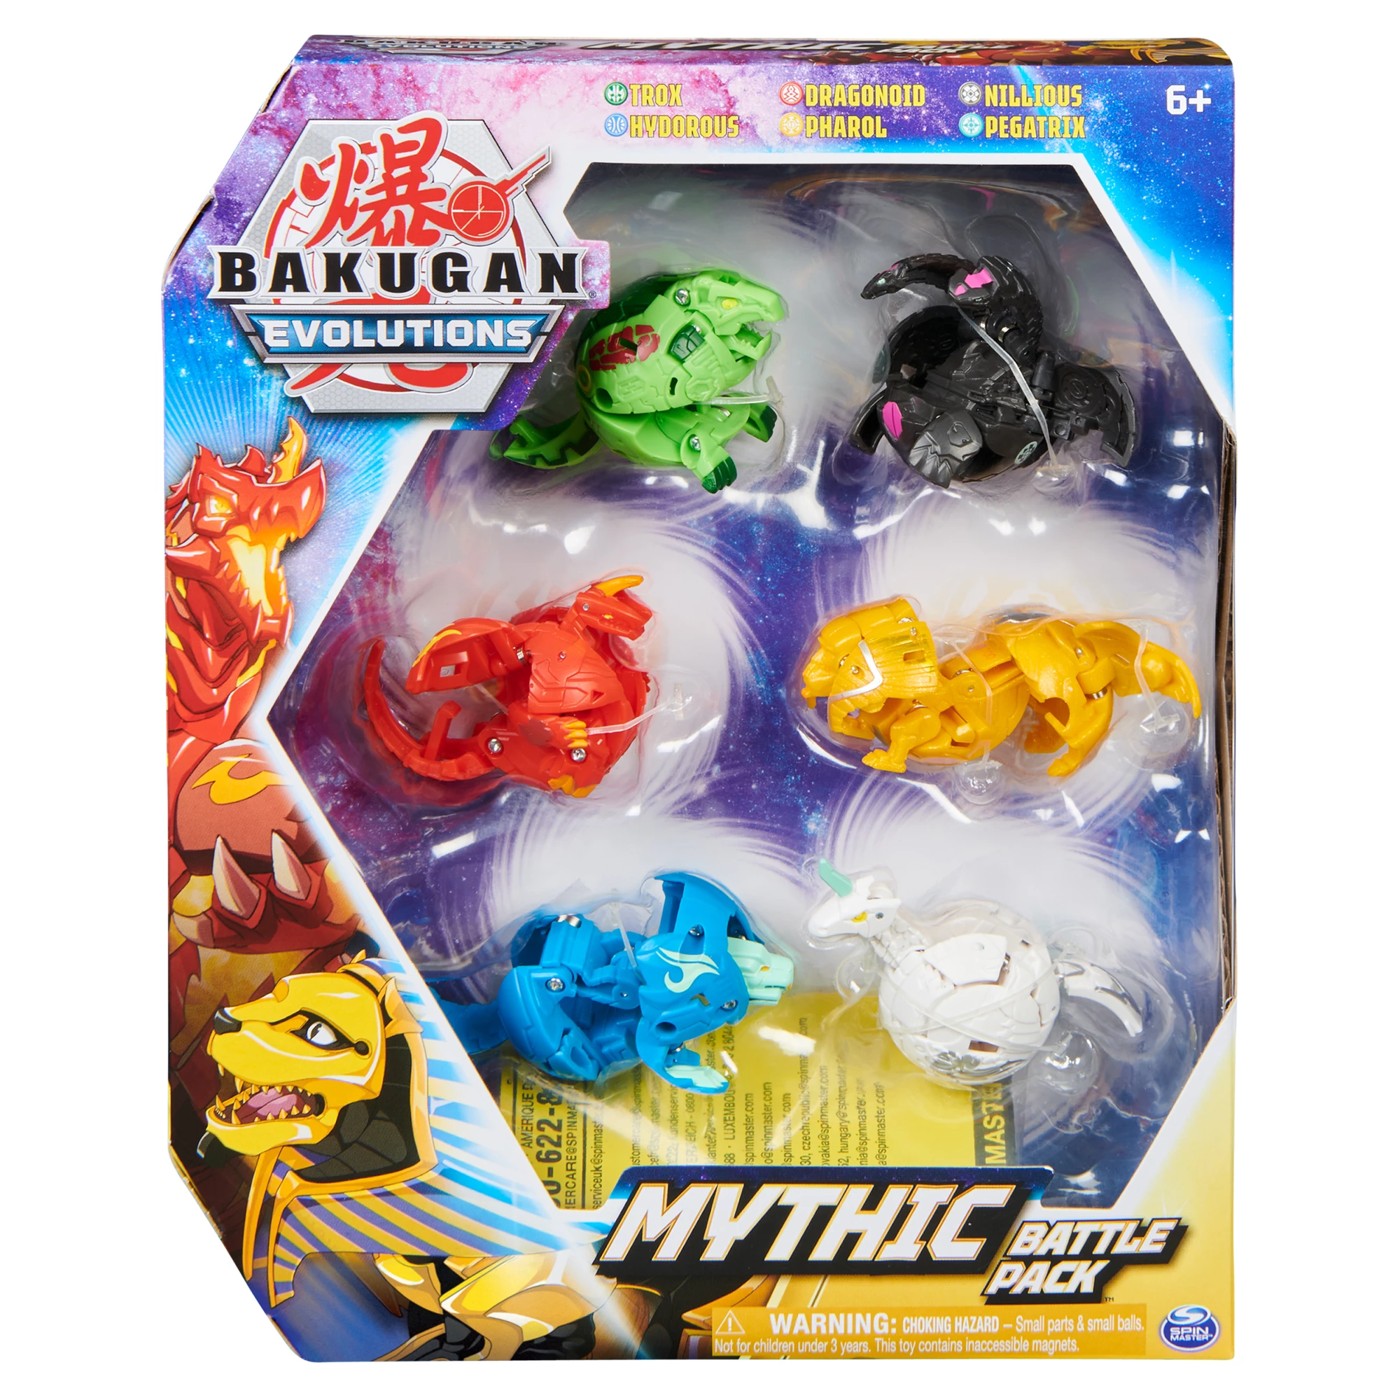 Bakugan Mythic Battle Pack